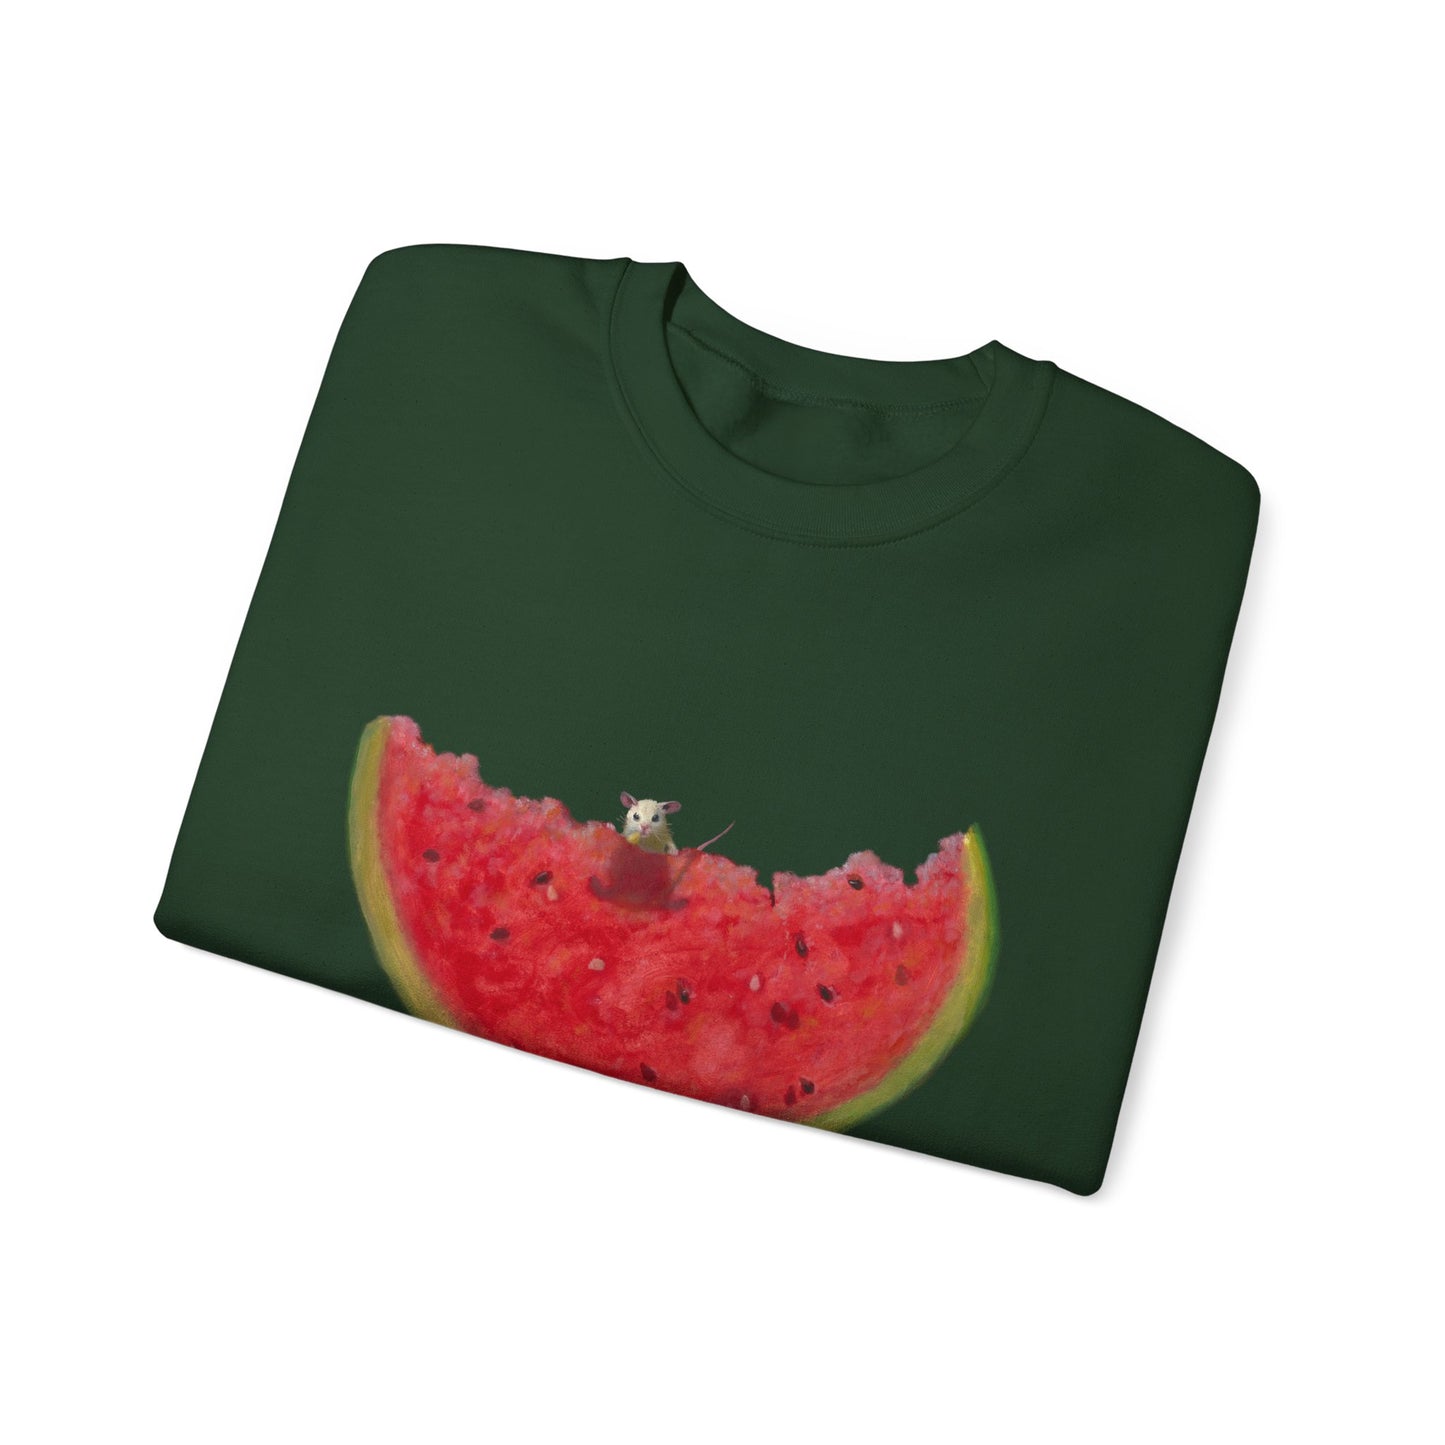 Stuart Dunkel: "Melon Lover" - Crewneck Sweatshirt